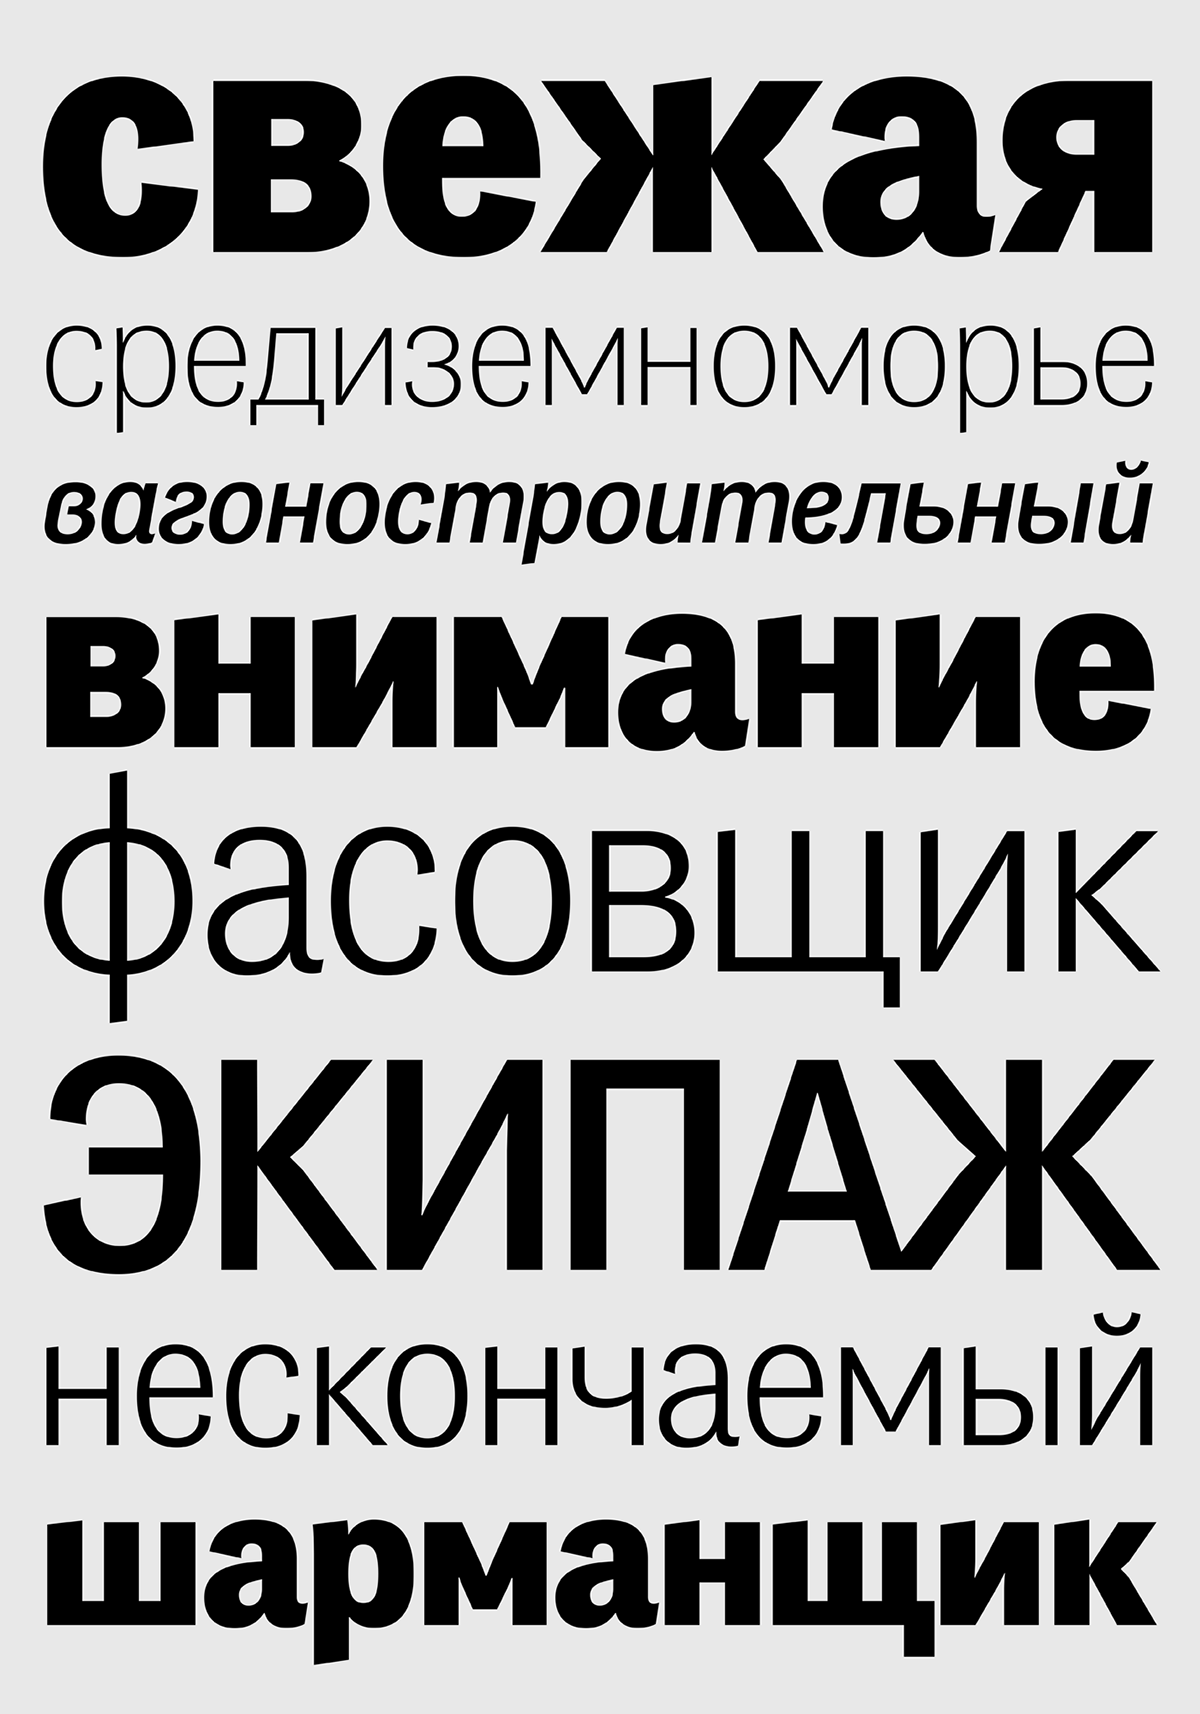 modern das grotesk grotesk typefaces Typeface font foundry Parachute specimen letters Greece worldwide grotesque